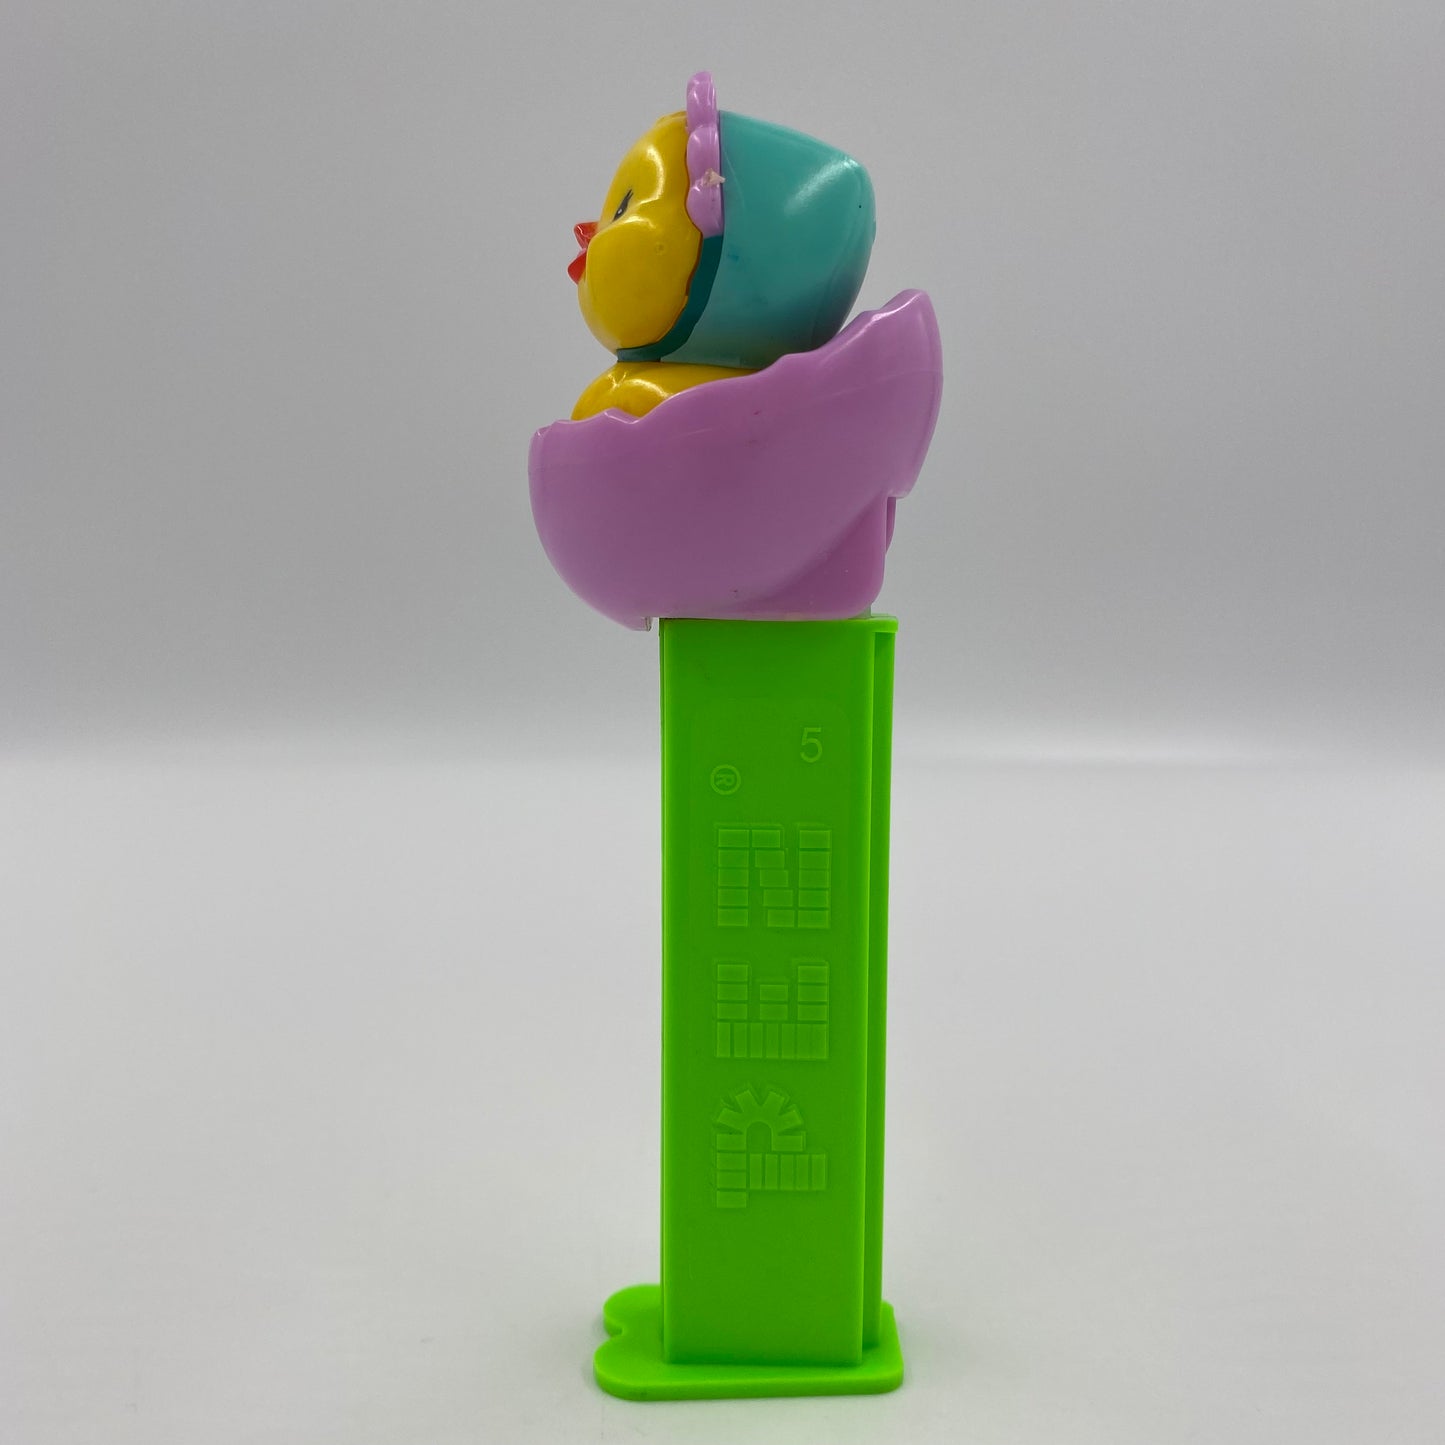 Easter Chick PEZ dispenser (2004) loose